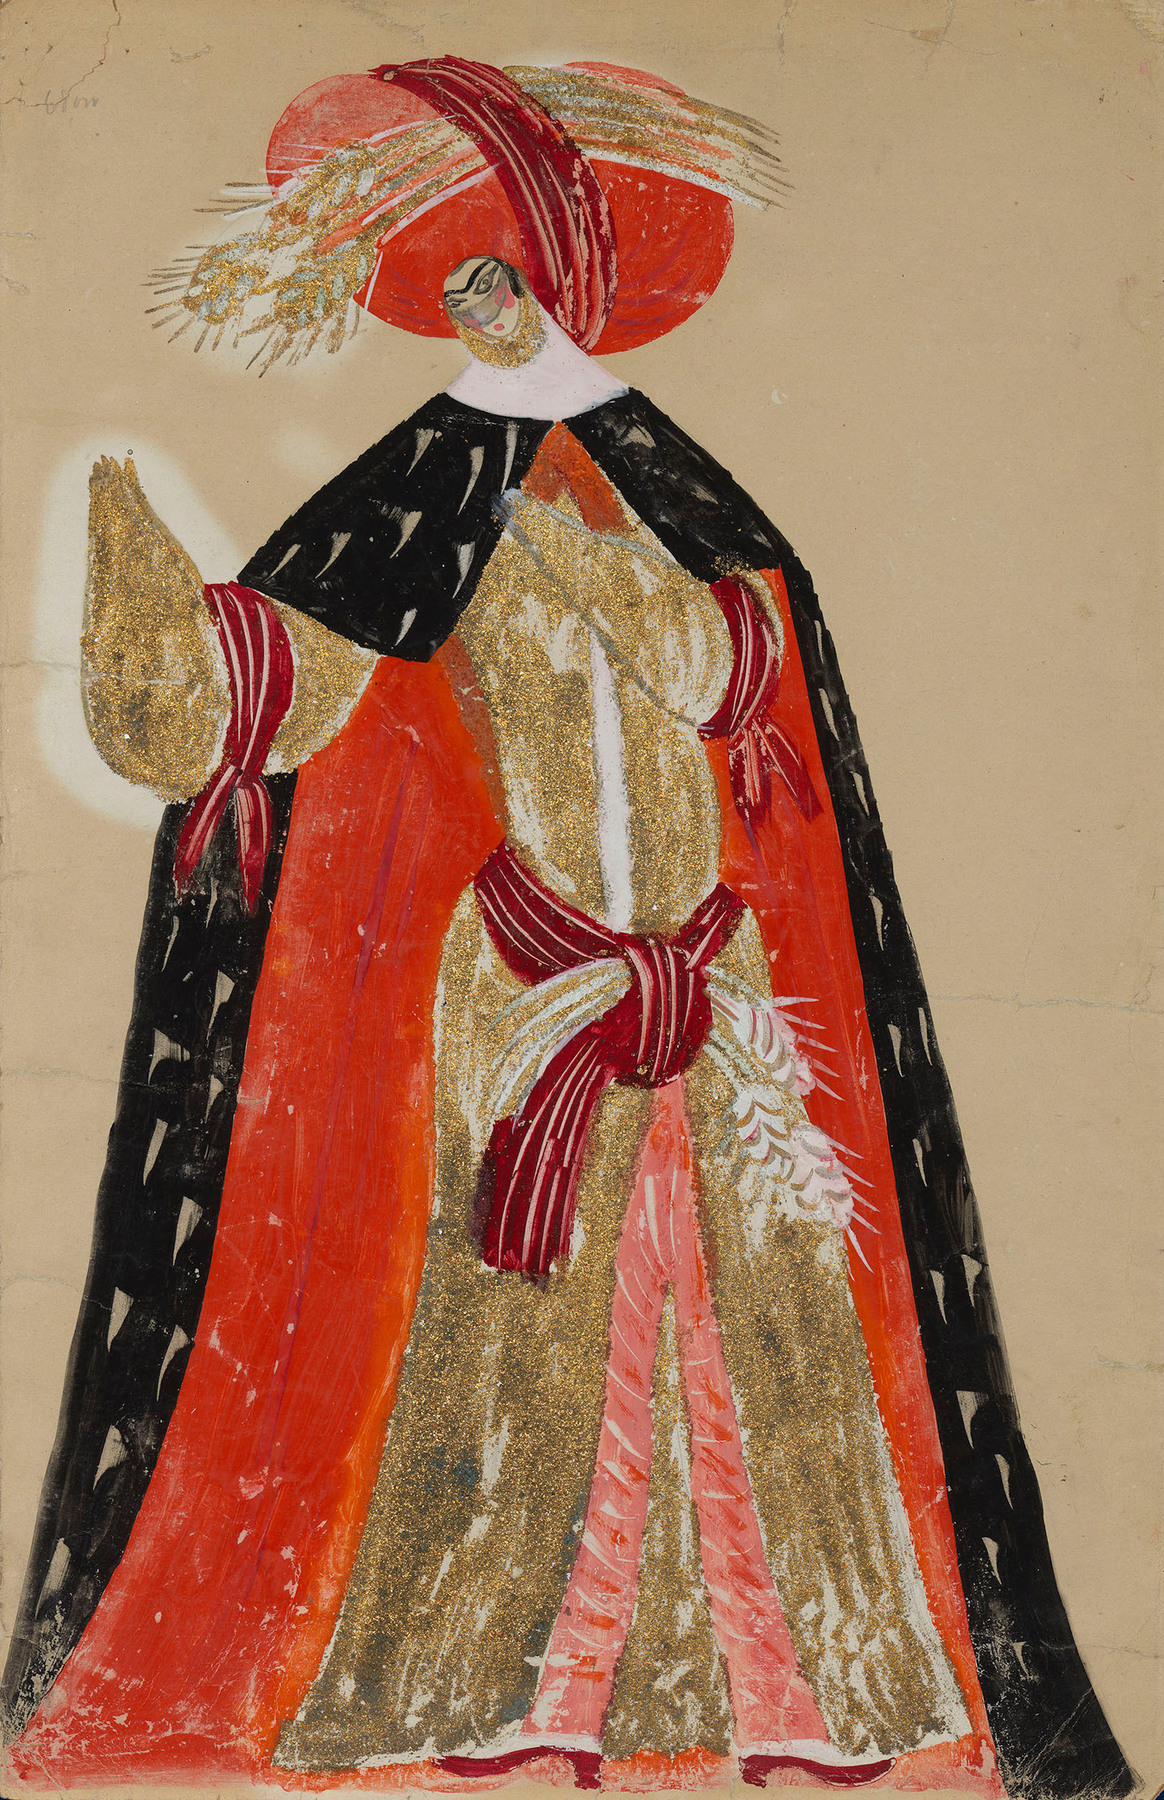 Costume Design for the Shemakhan Princess in Rimsky-Korsakov's "Le Coq d'Or"